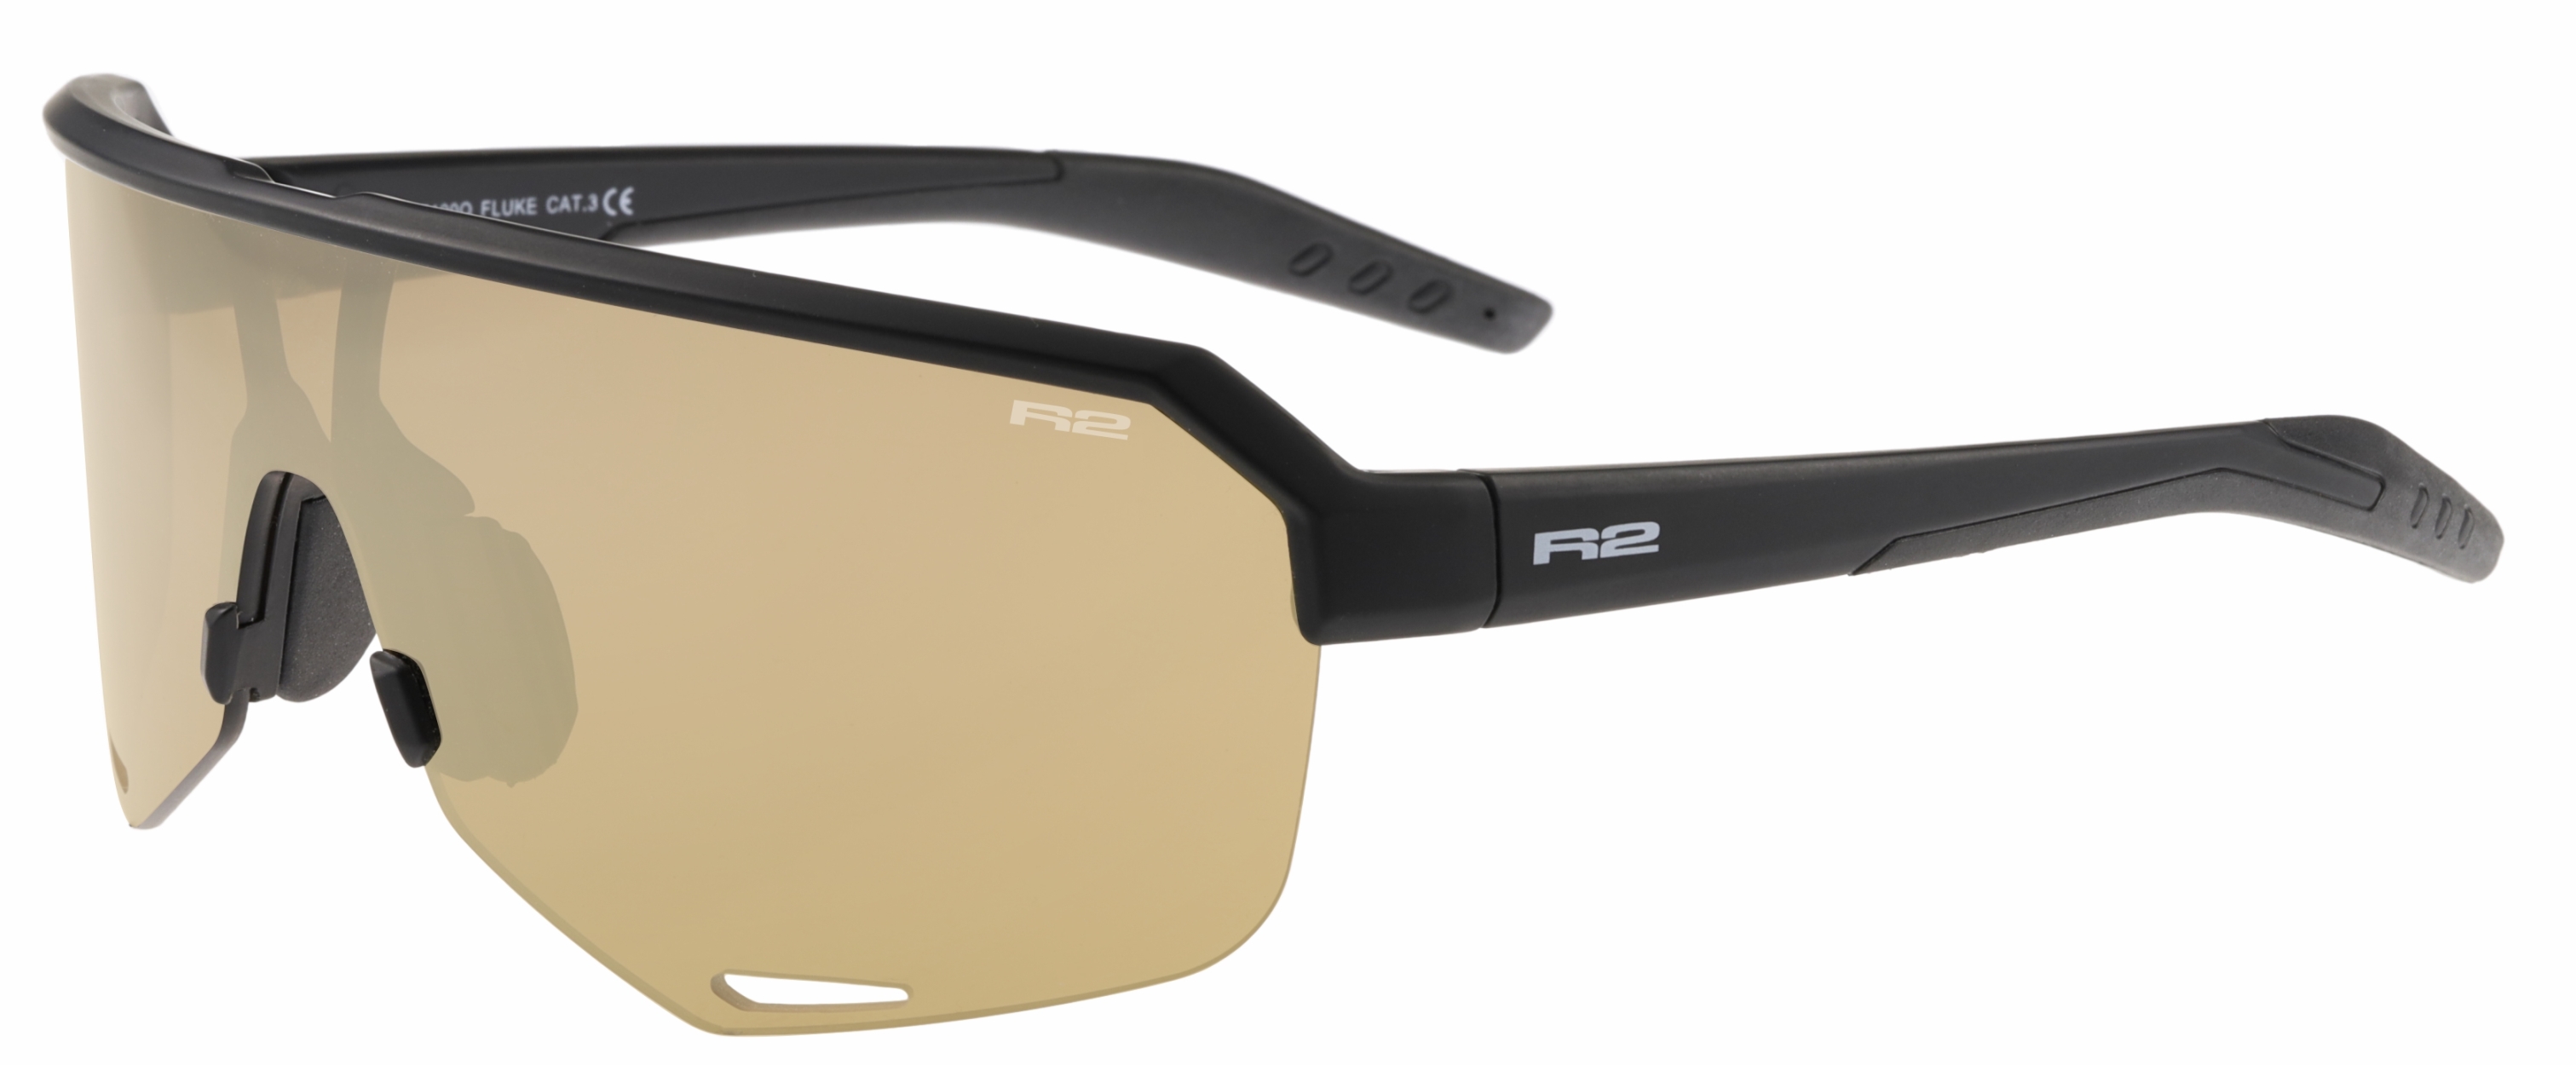 HD sport sunglasses R2 FLUKE AT100Q